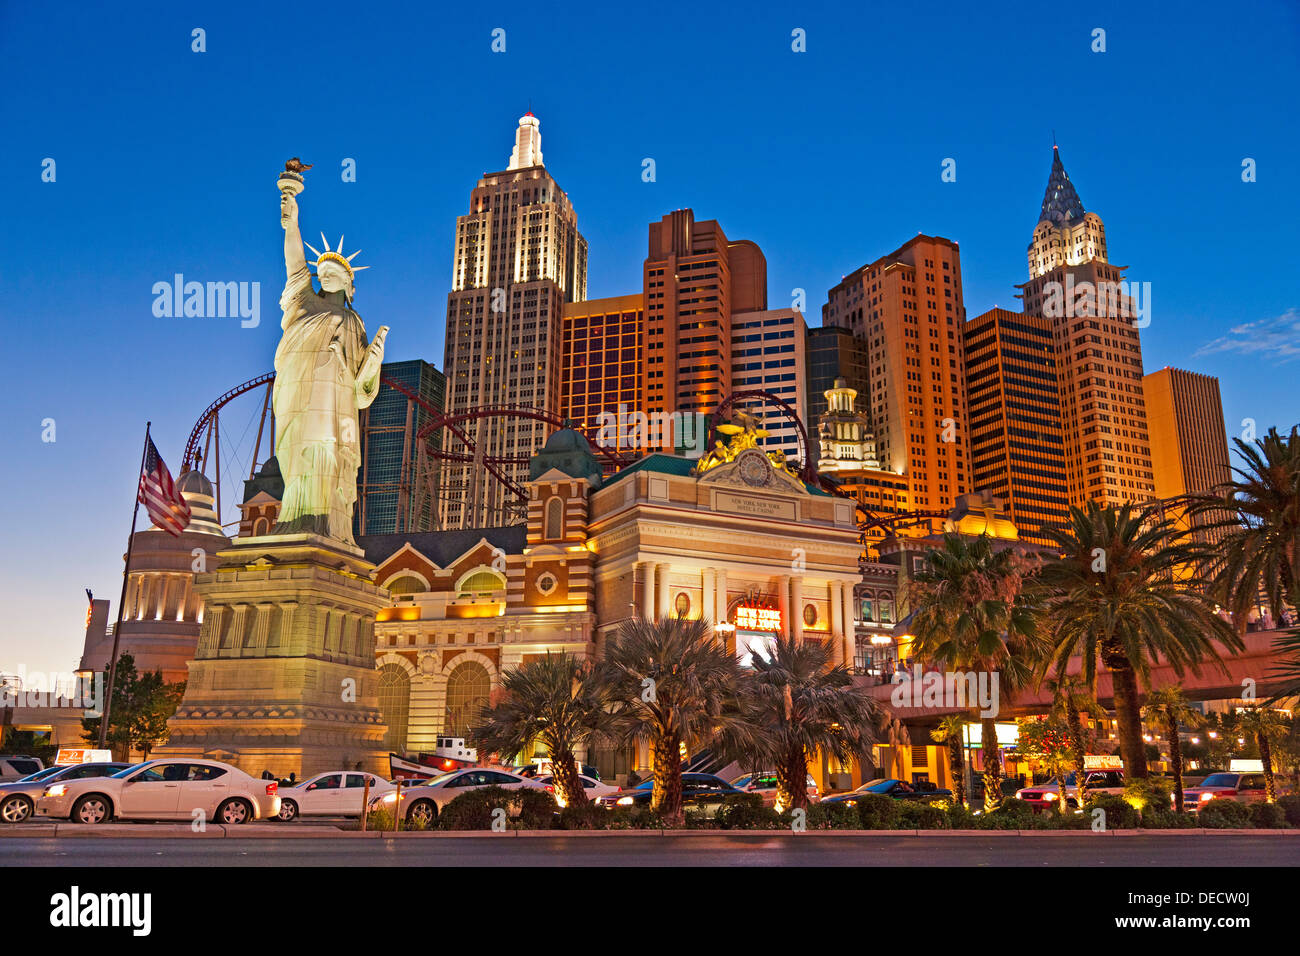 New York-New York Hotel & Casino, Las Vegas, Nevada, USA at dusk. JMH5404 Stock Photo